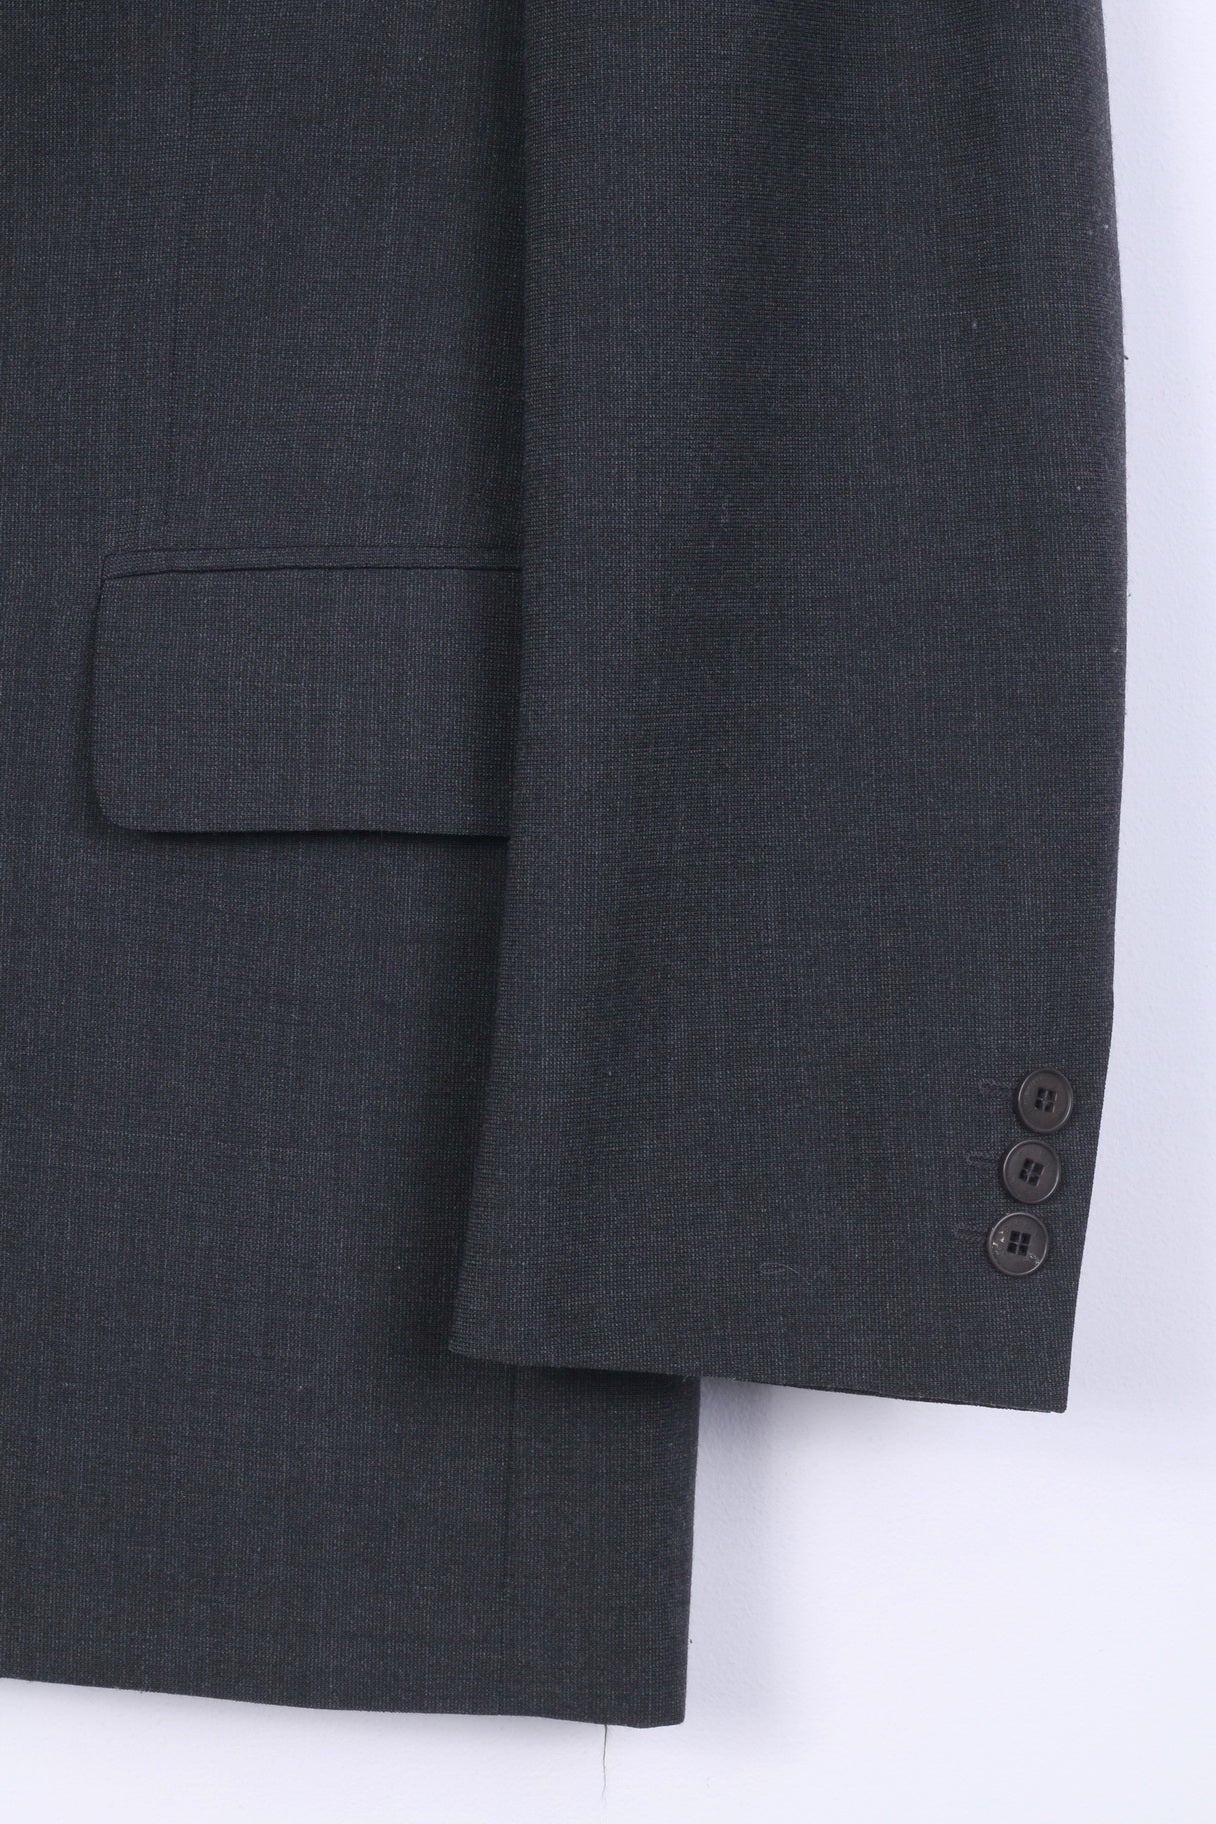 Bertoni Mens S Blazer Grey Wool Blend Single Breasted Jacket